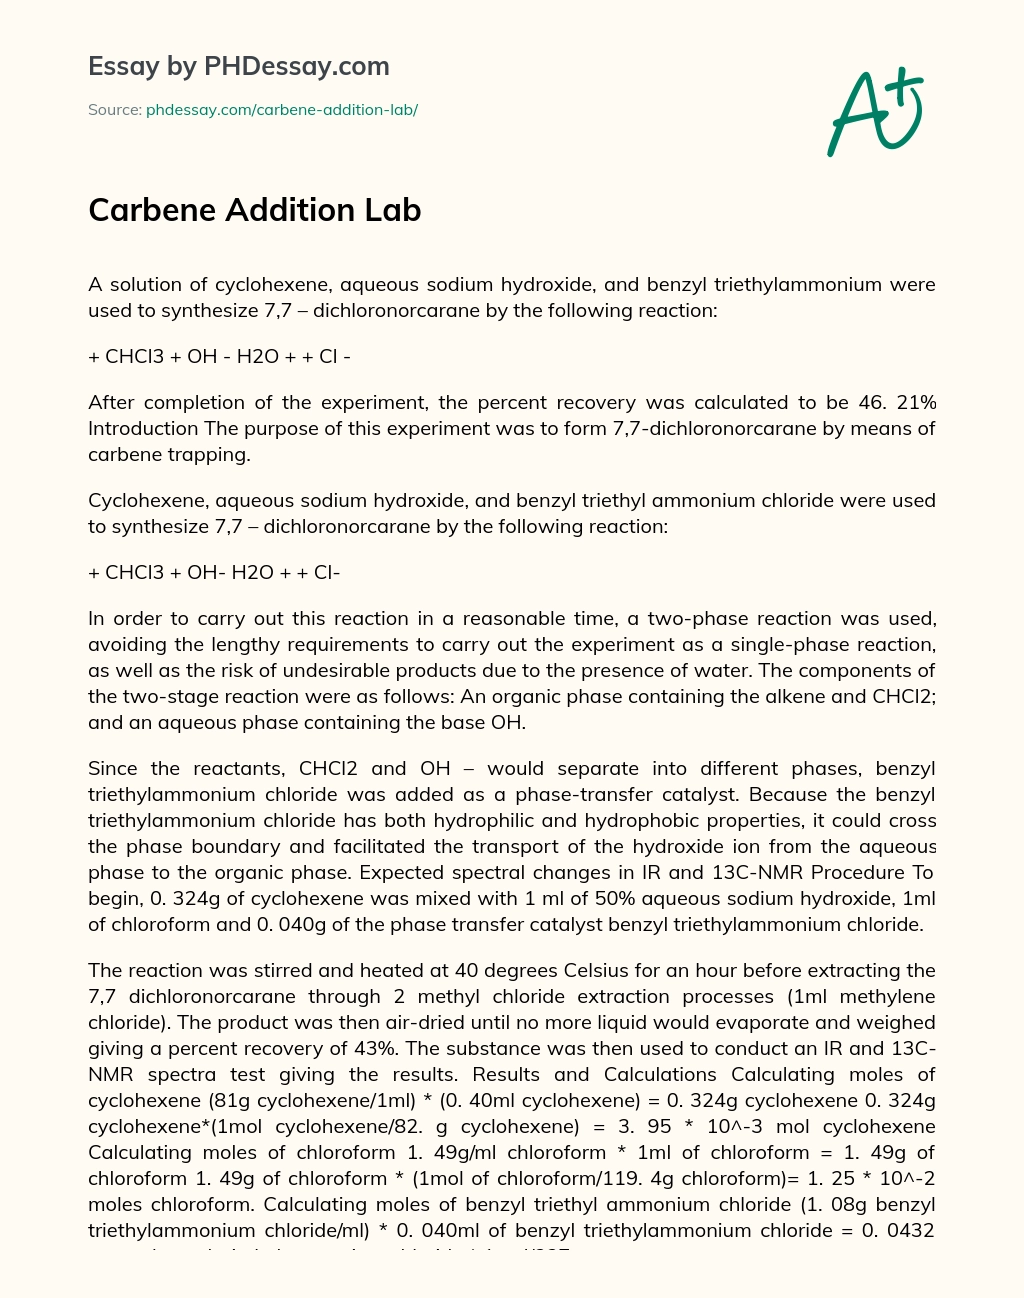 Carbene Addition Lab essay